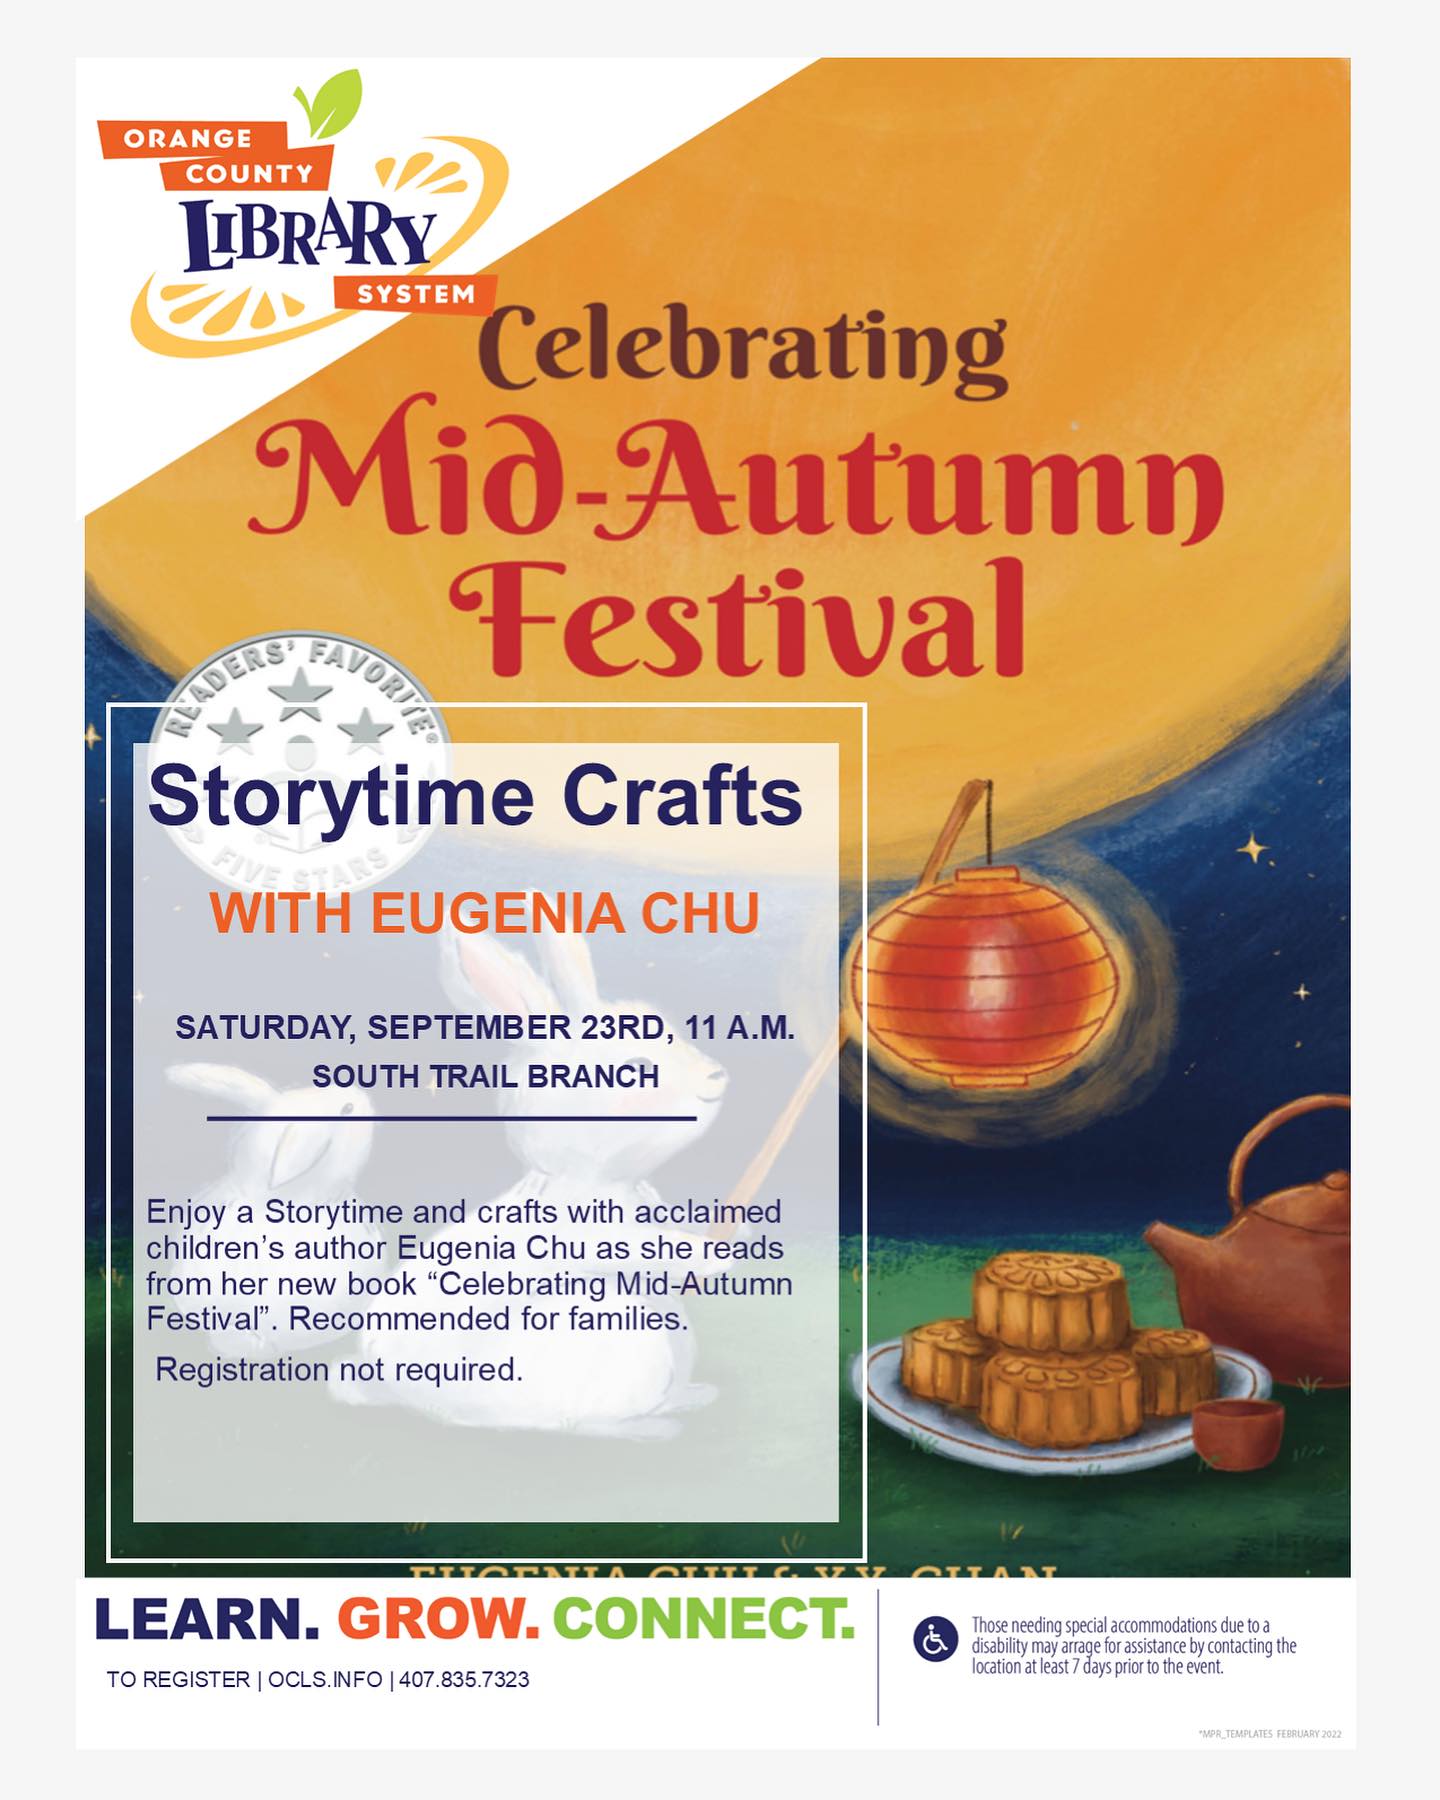 Storytime reading of “Celebrating Mid-Autumn Festival"